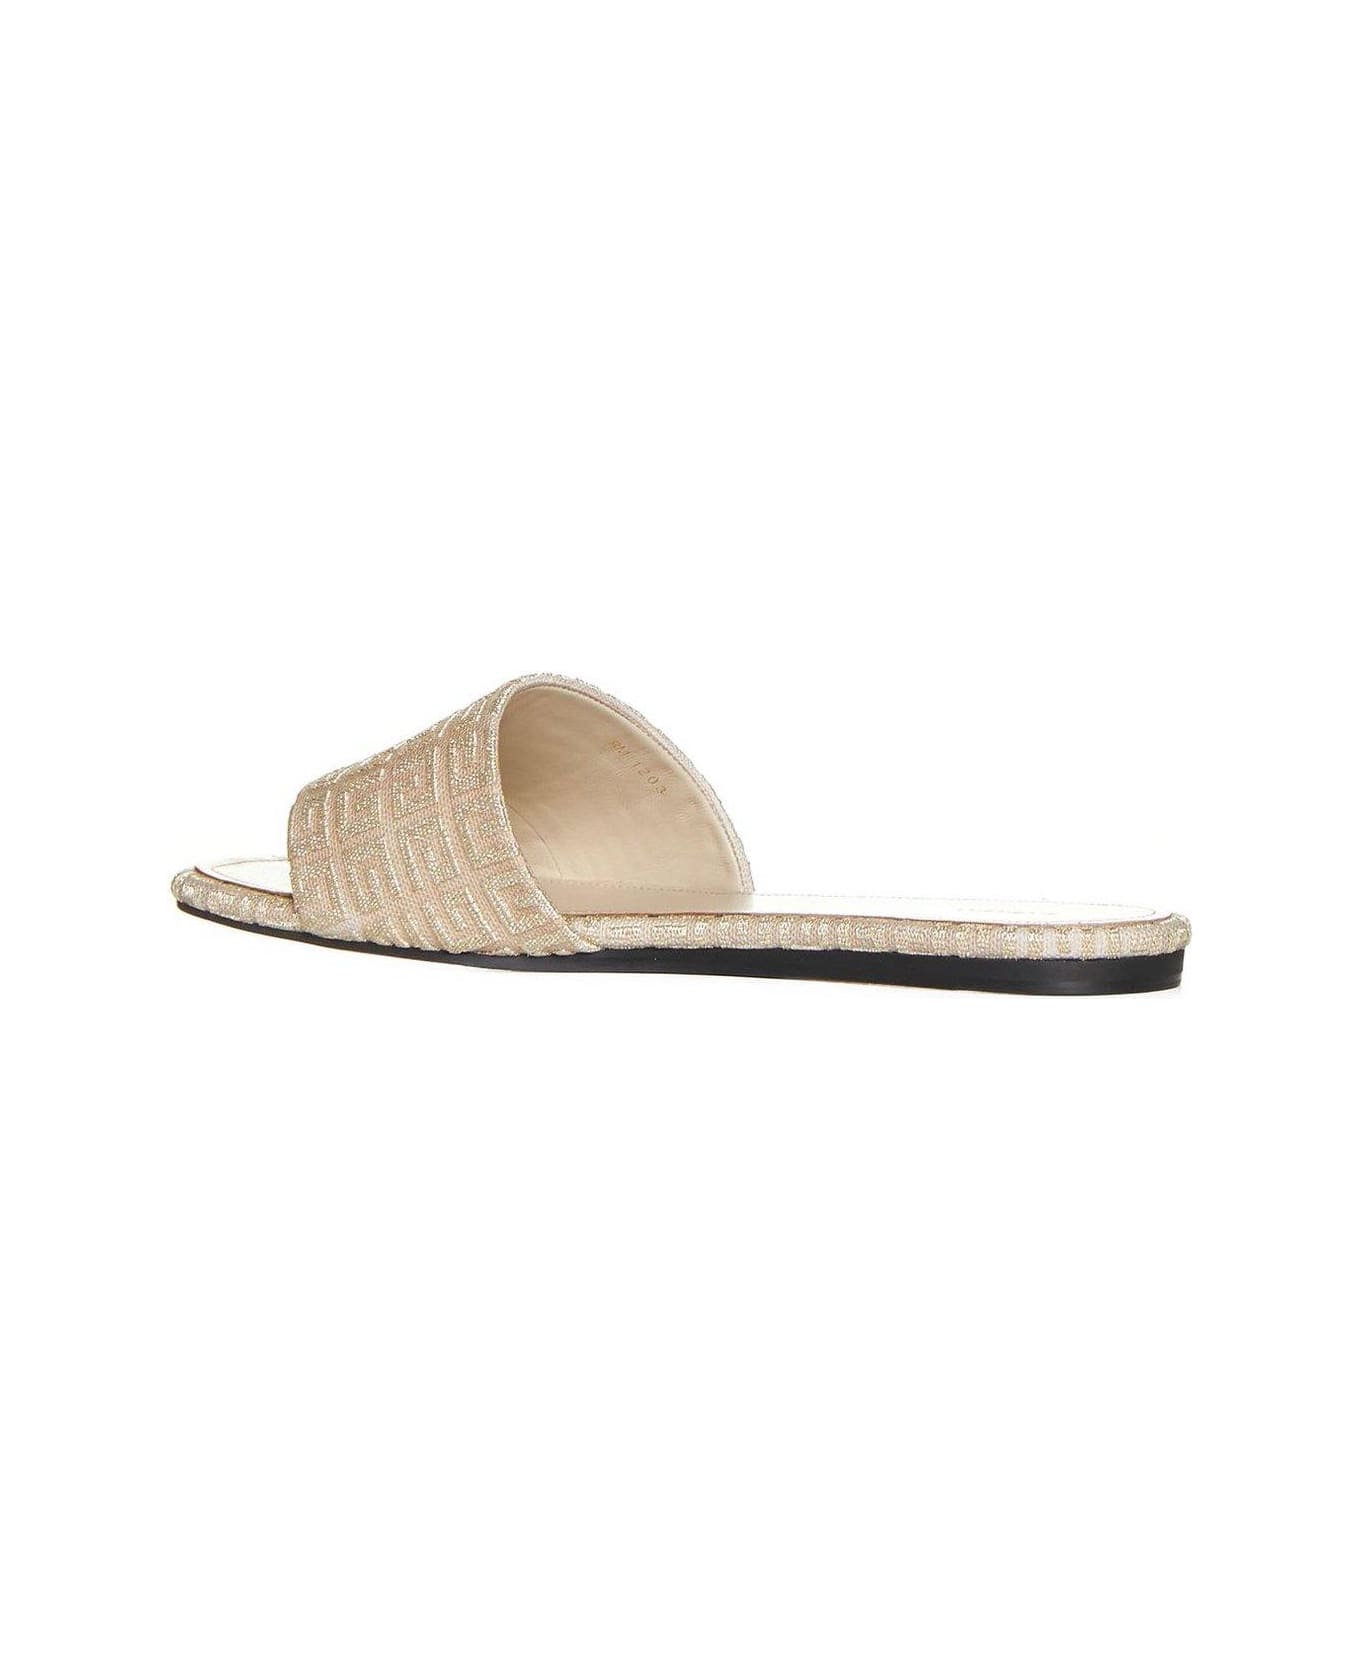 Givenchy Motif Open-toe Sandals - Golden サンダル